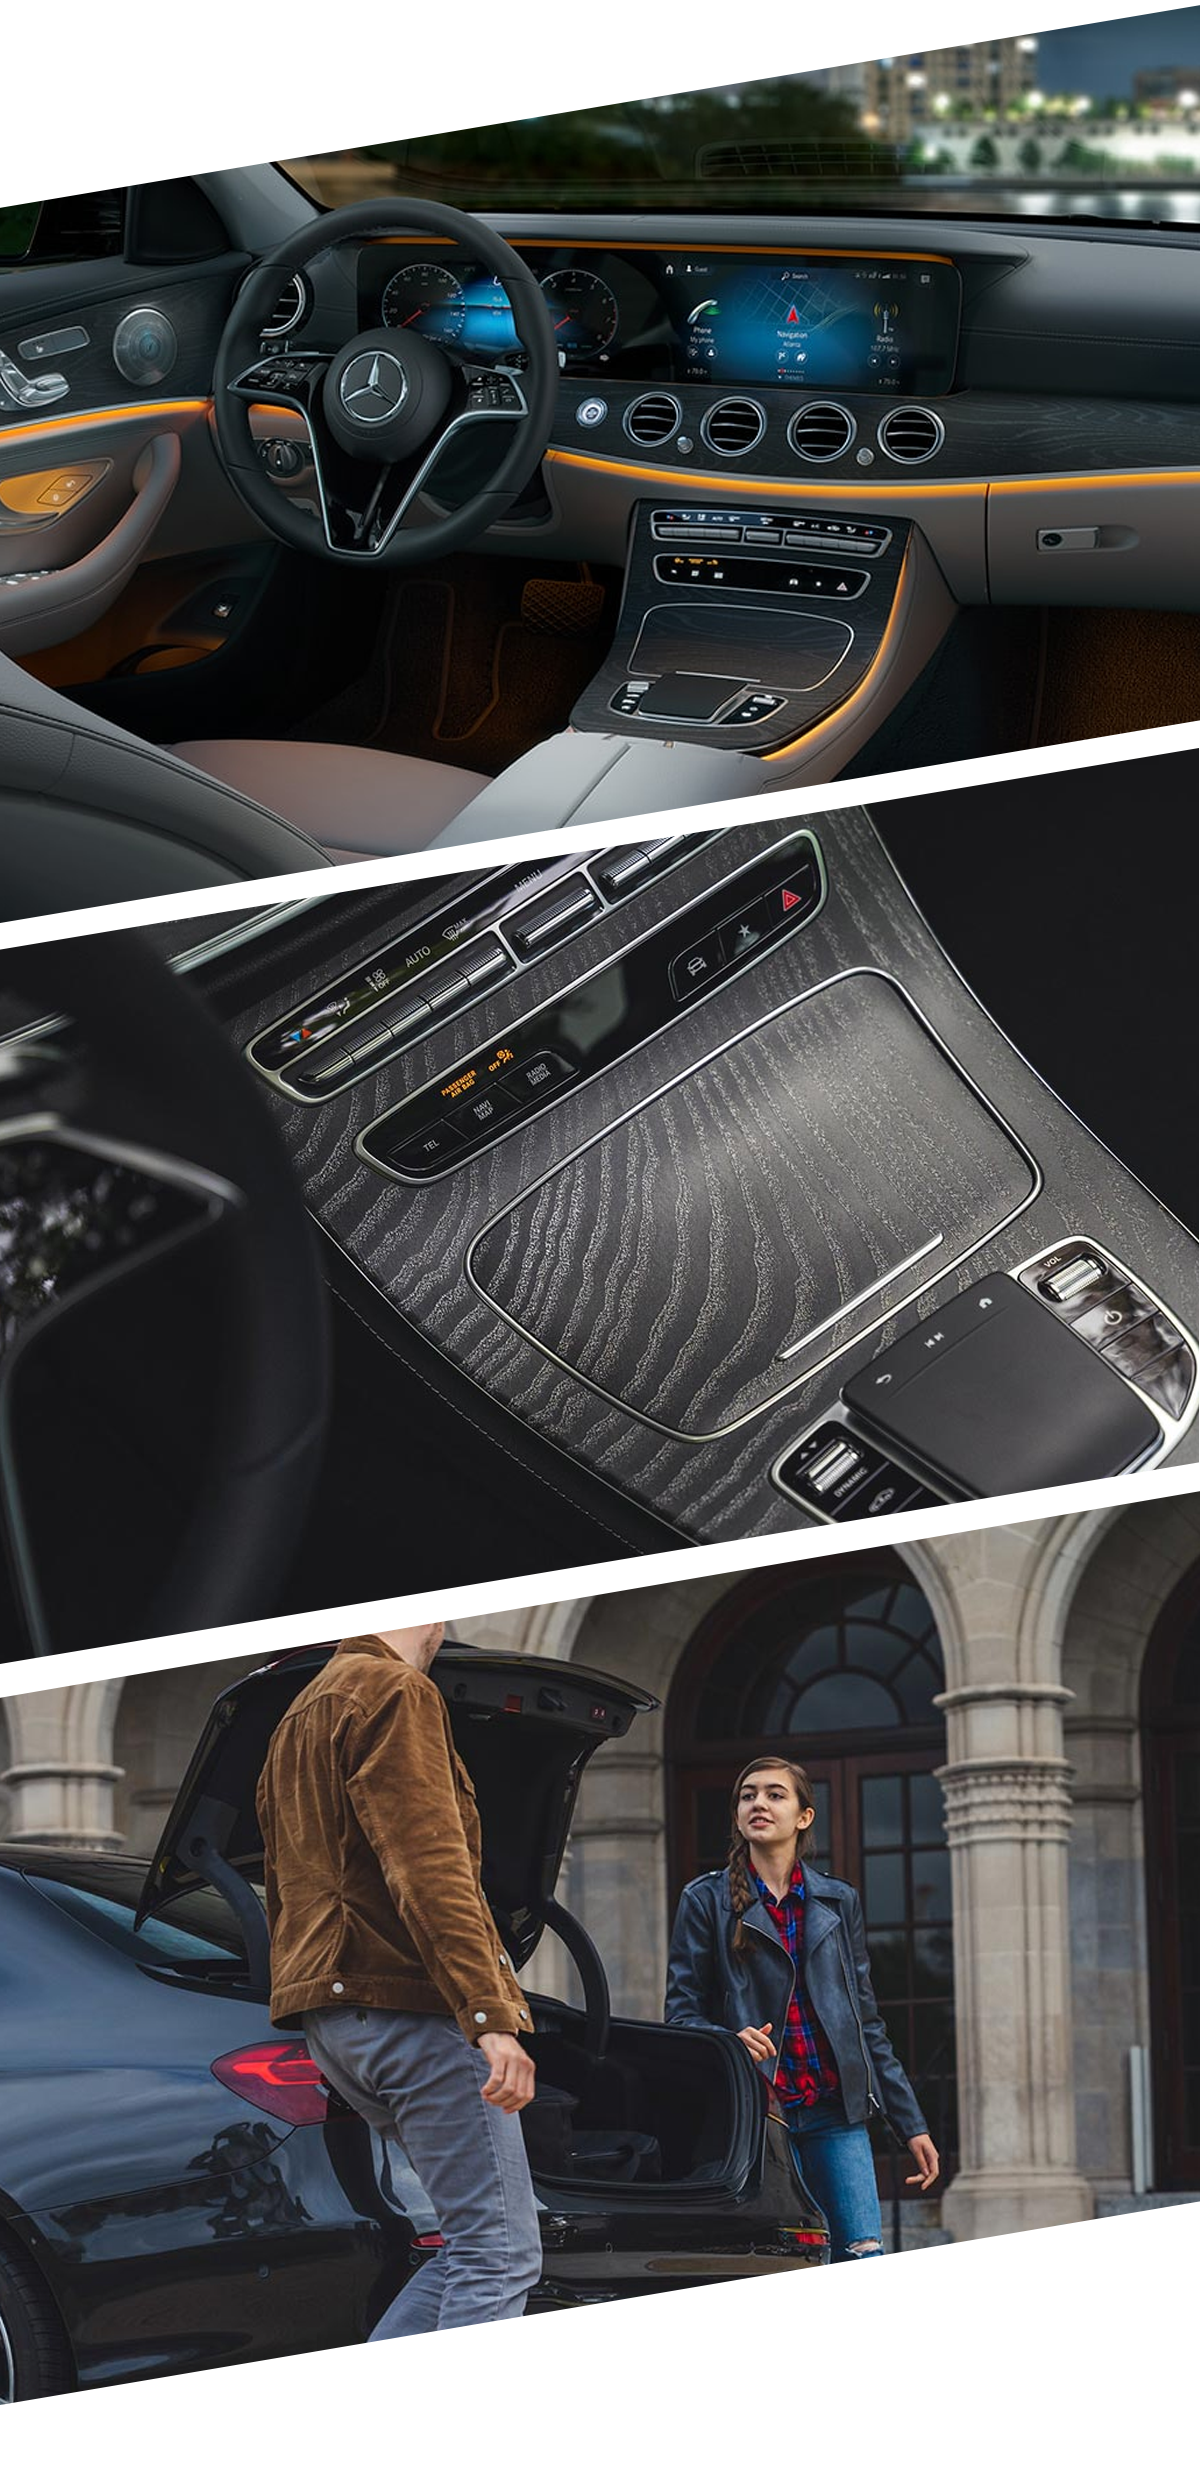 2021 Mercedes-Benz E-Class Interior Images